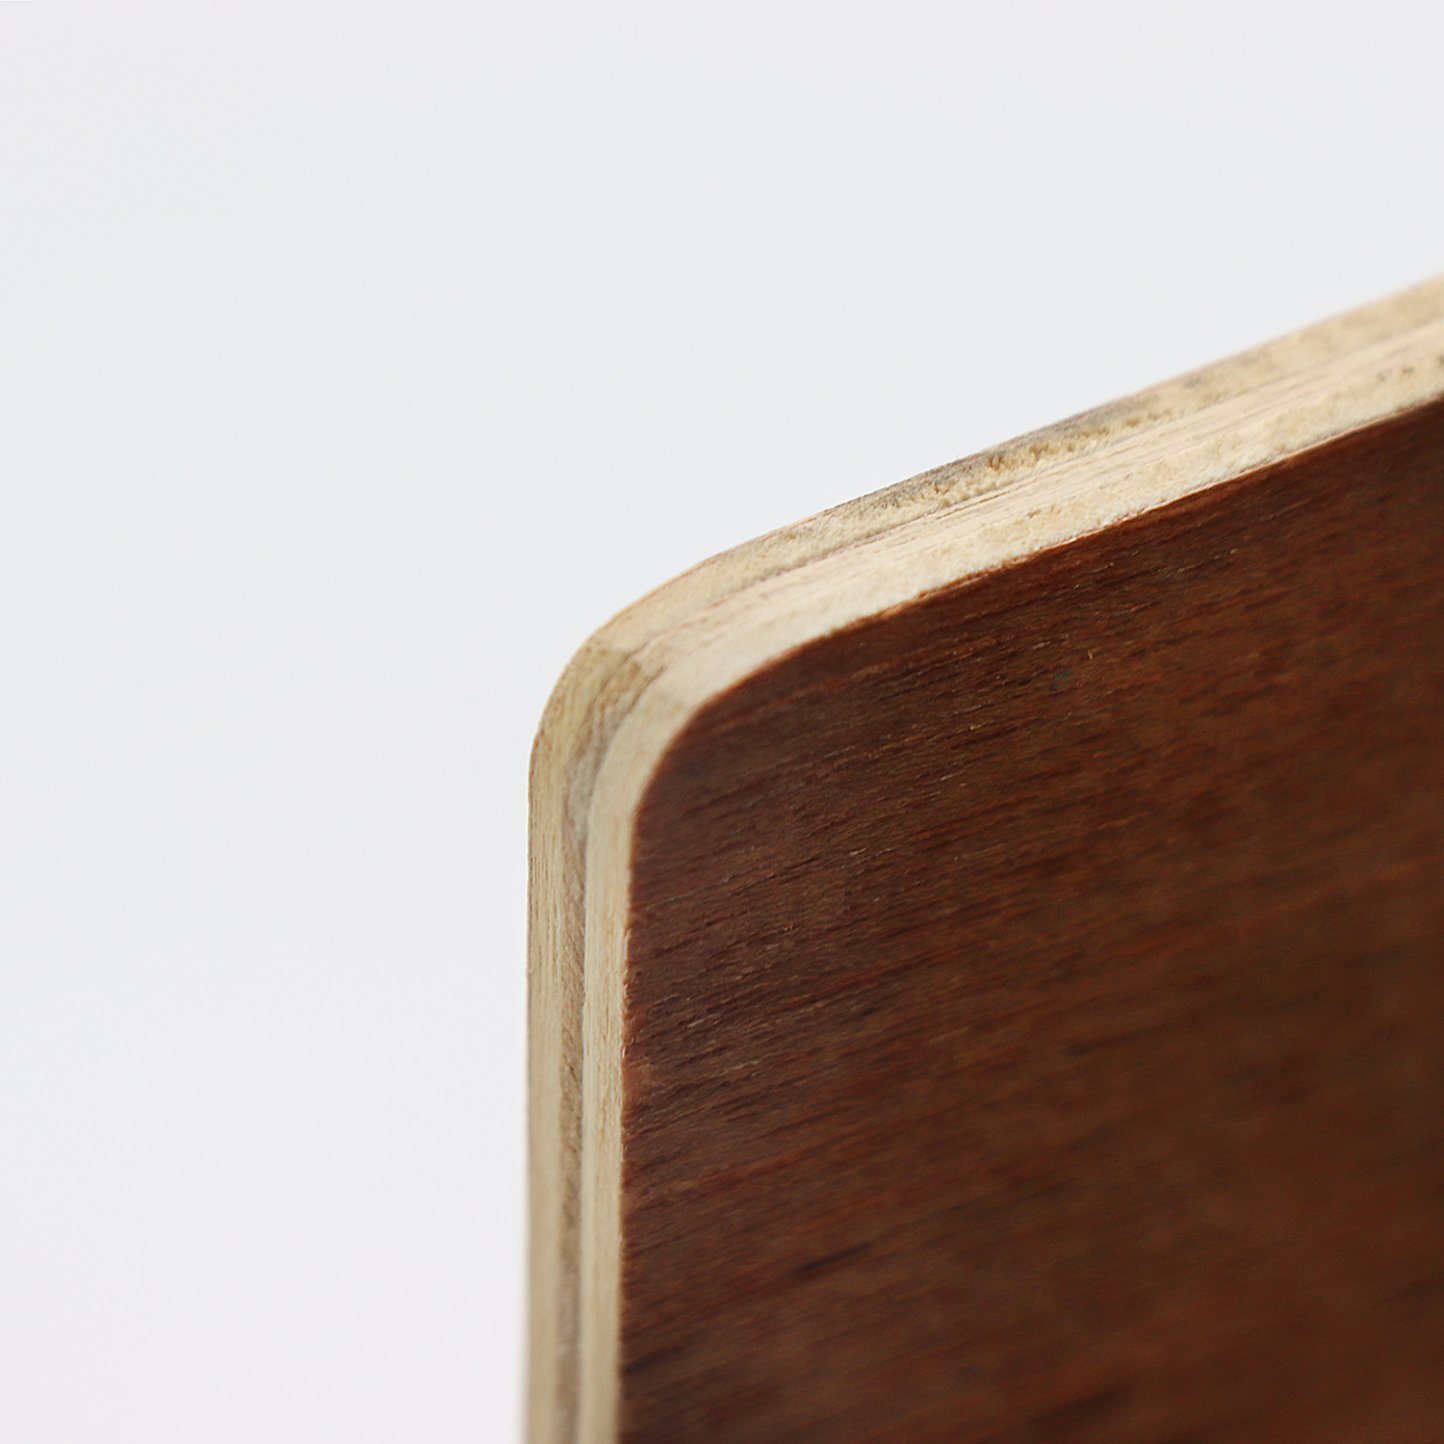 Woodgrain Melamine Film Faced Plywood Board Wholesale Melamine Paper Coated Board for Furniture